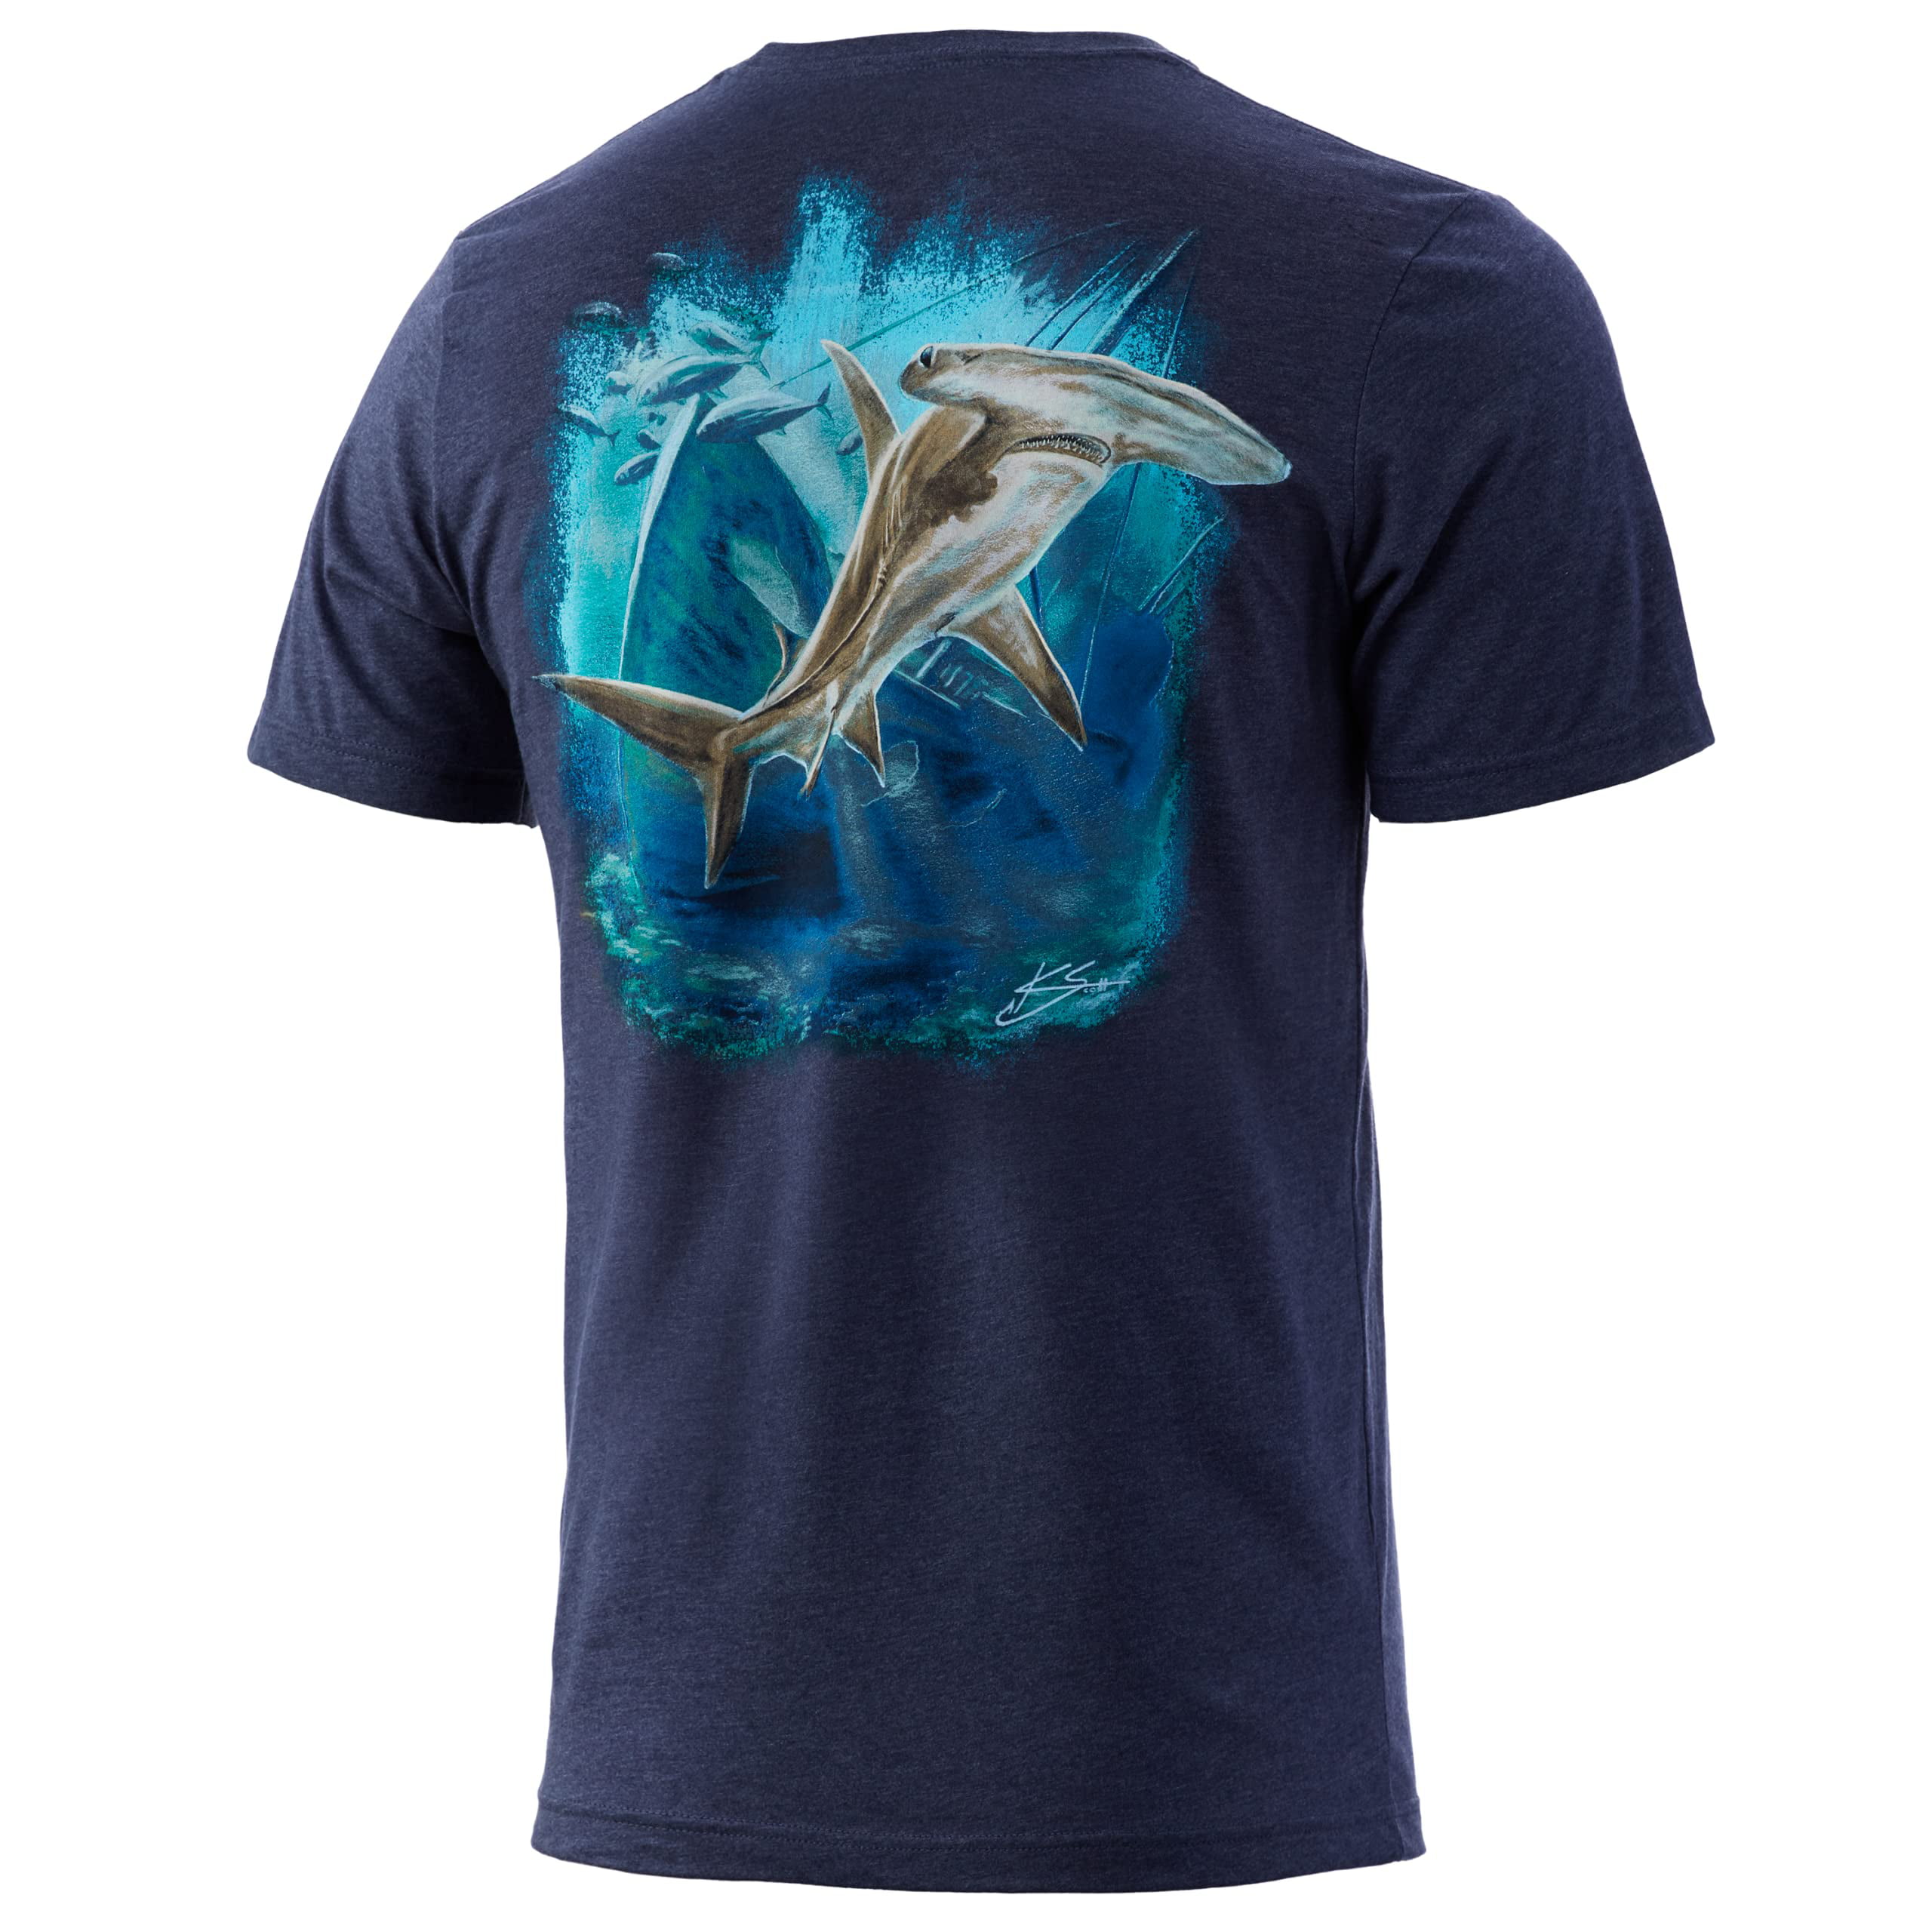 HUK Performance Fishing Gear KScott Logo Tee L Medium Gray T-Shirt $25 